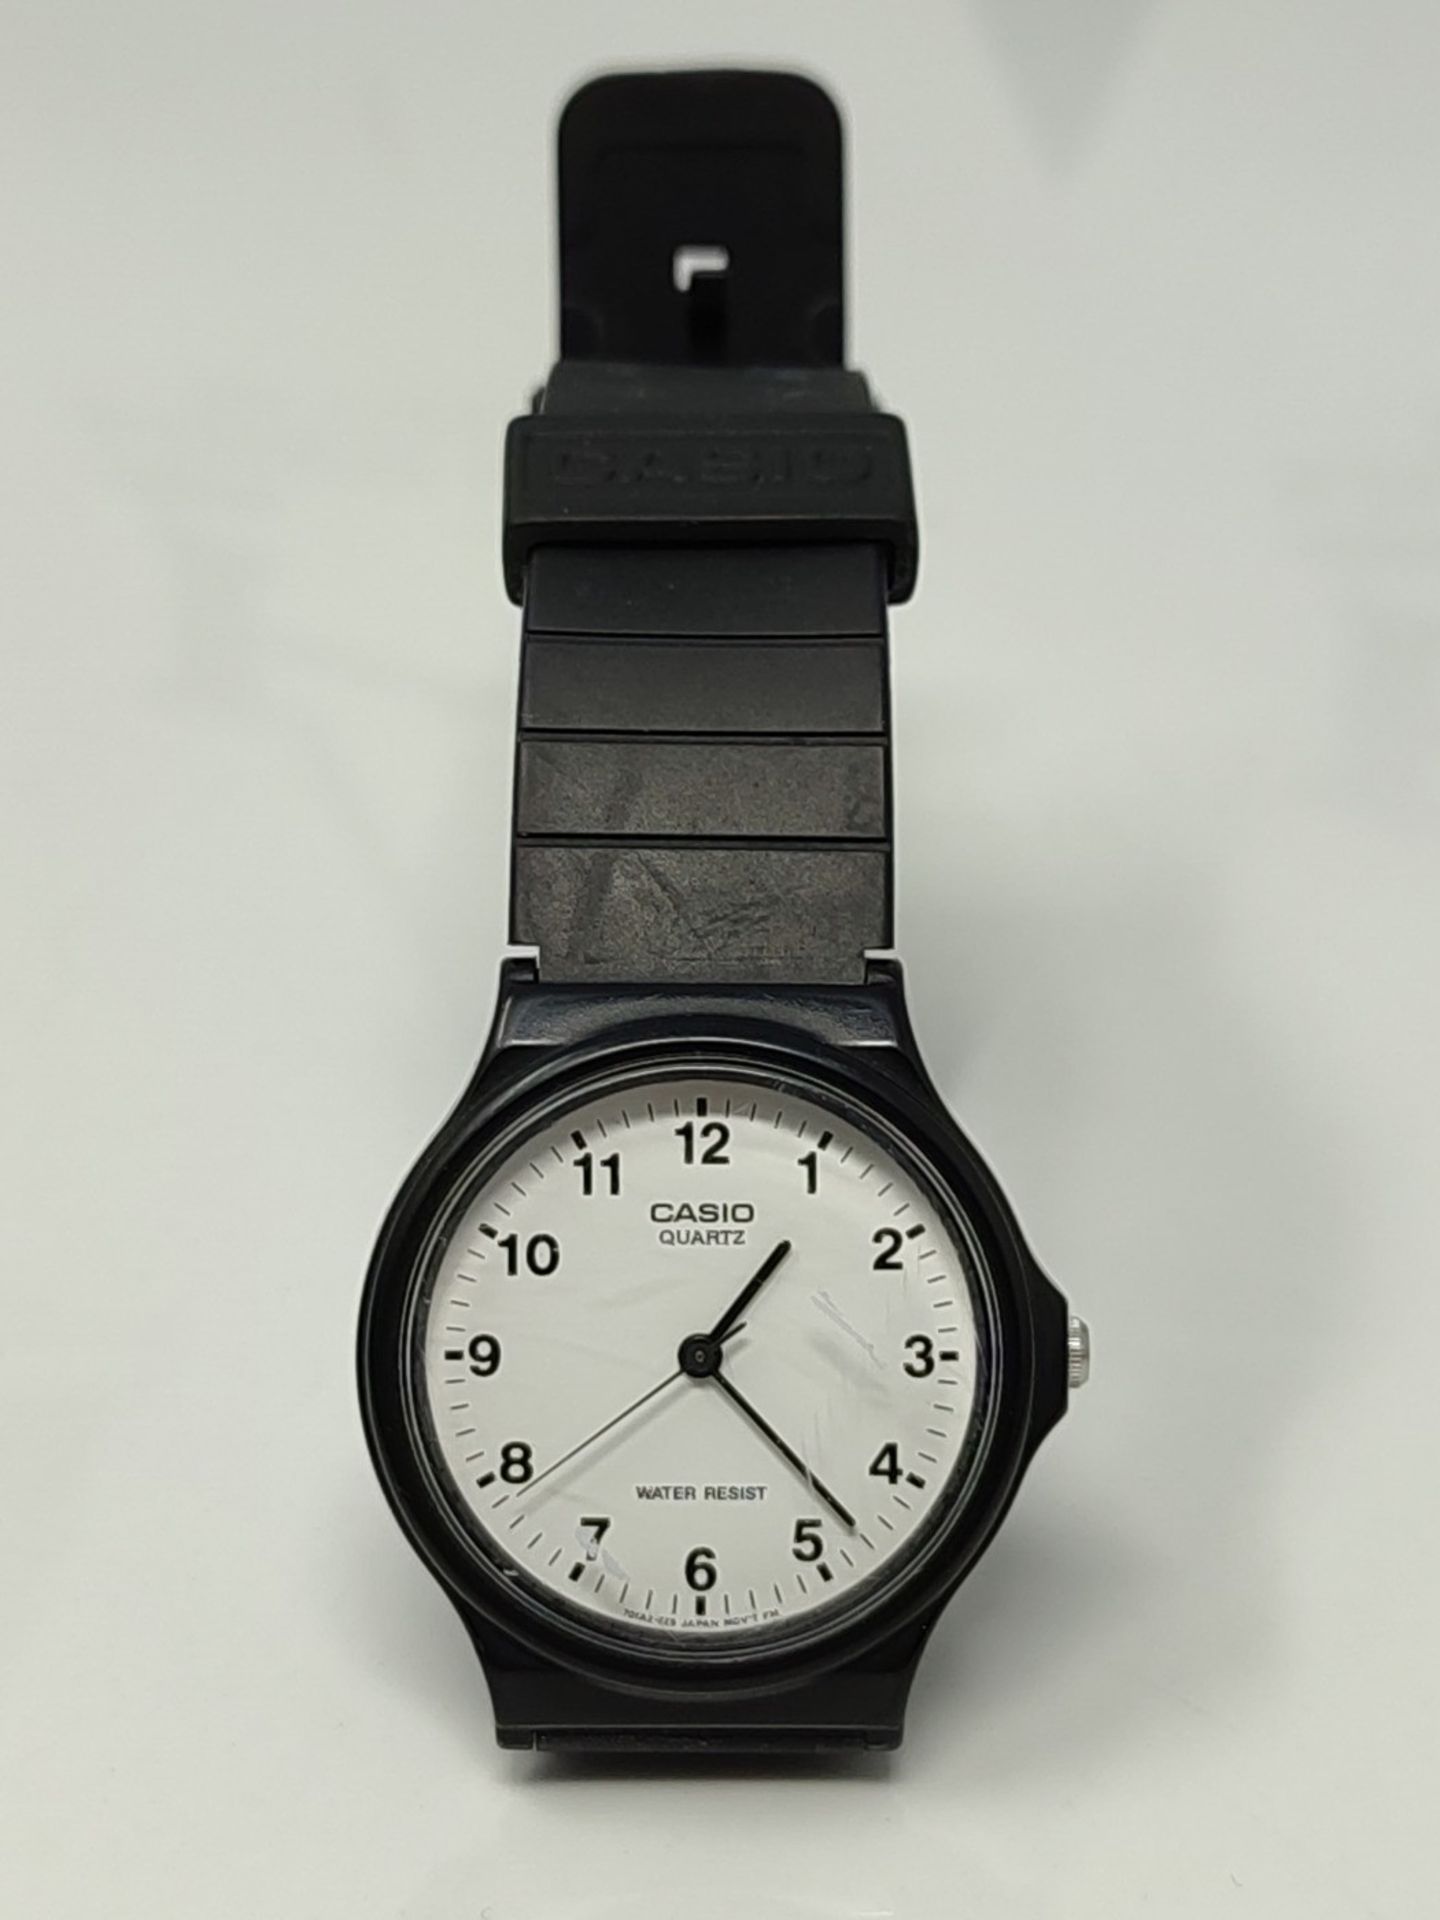 Casio Men's Quartz Analog Watch with Plastic Strap MQ-24-7BLLEG, Black, Strip - Image 2 of 3